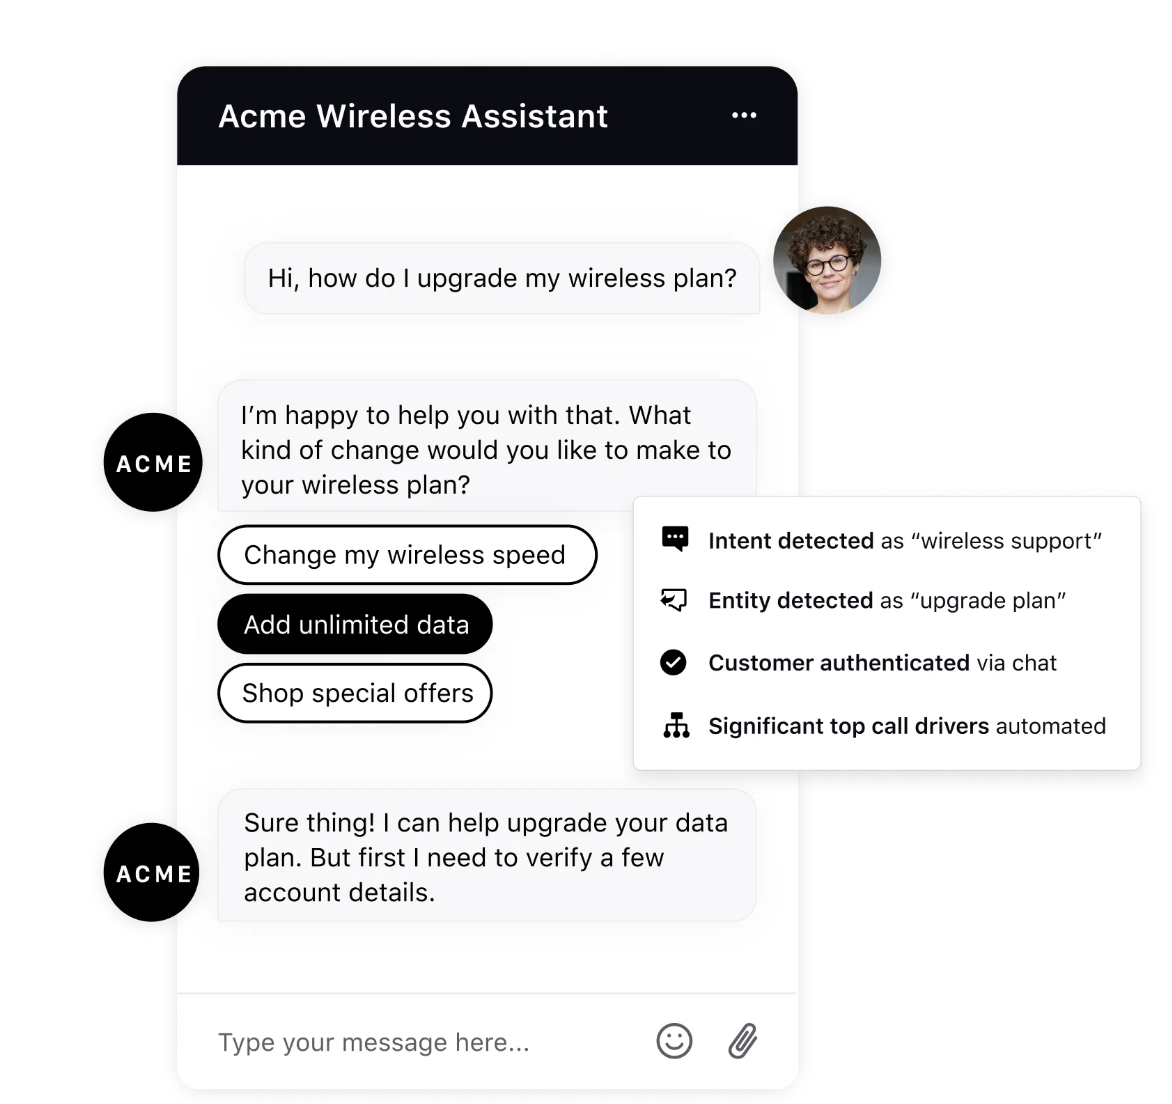 Sprinklr's customer self-service conversational AI chatbot